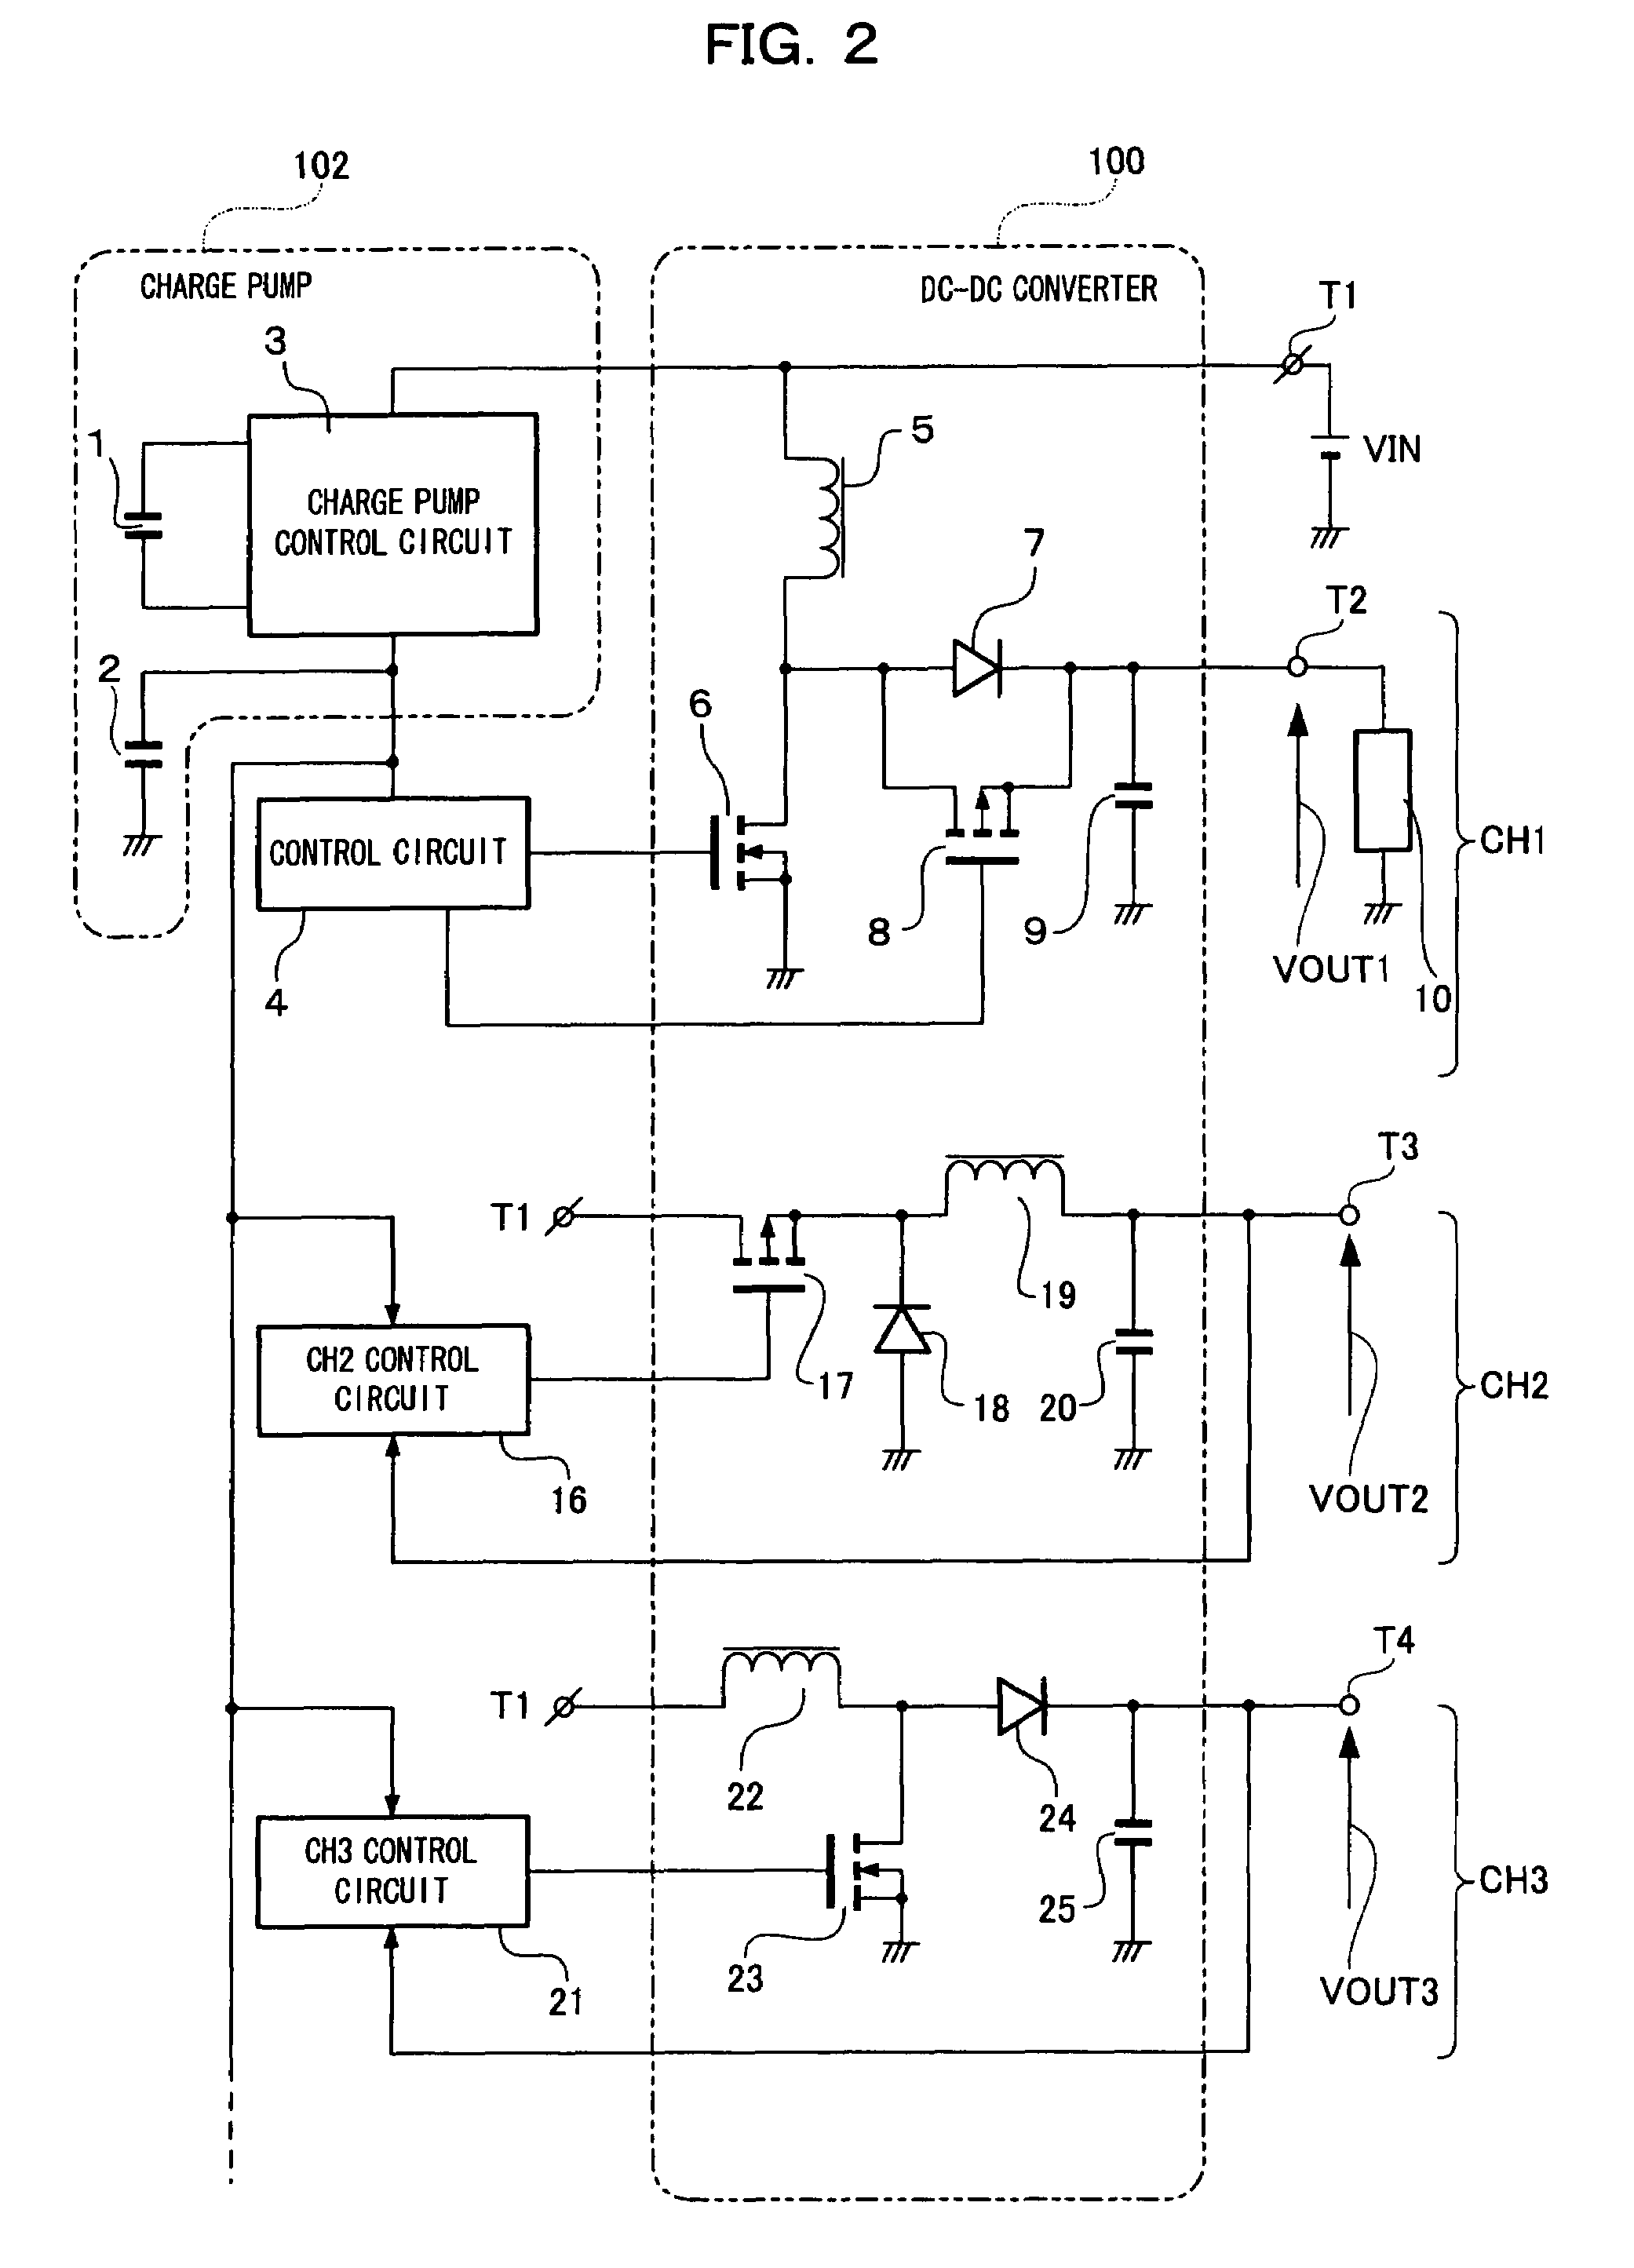 Switching power supply circuitry